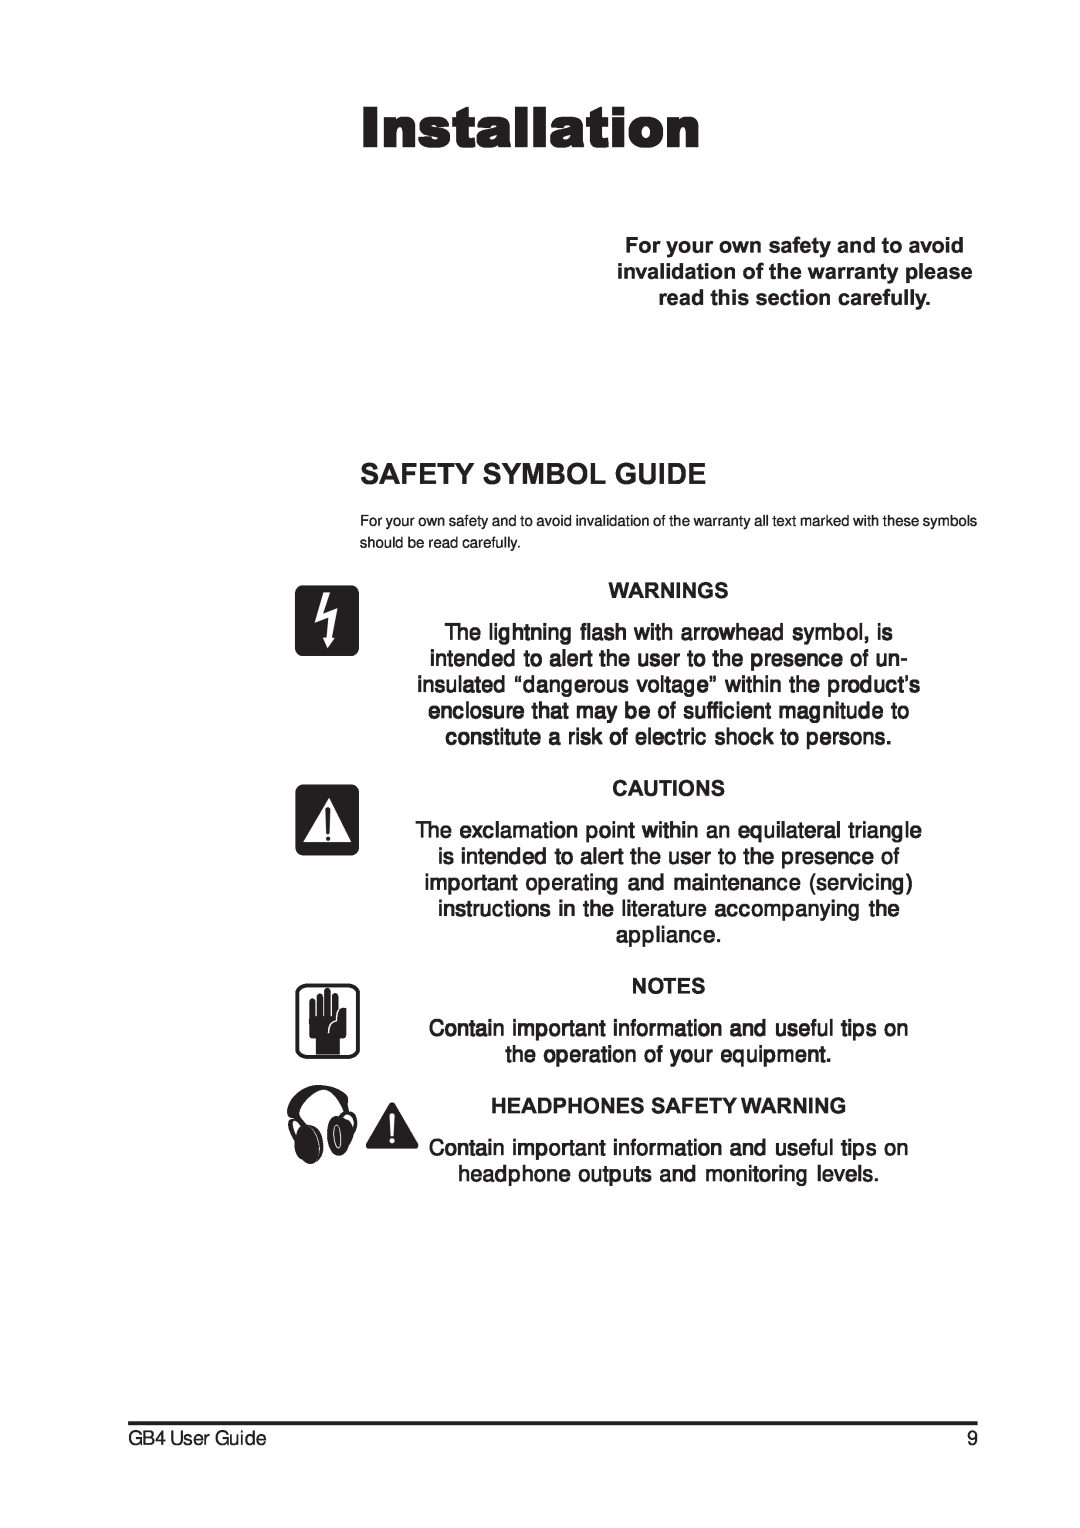 Harman-Kardon GB4 manual Installation, Safety Symbol Guide 